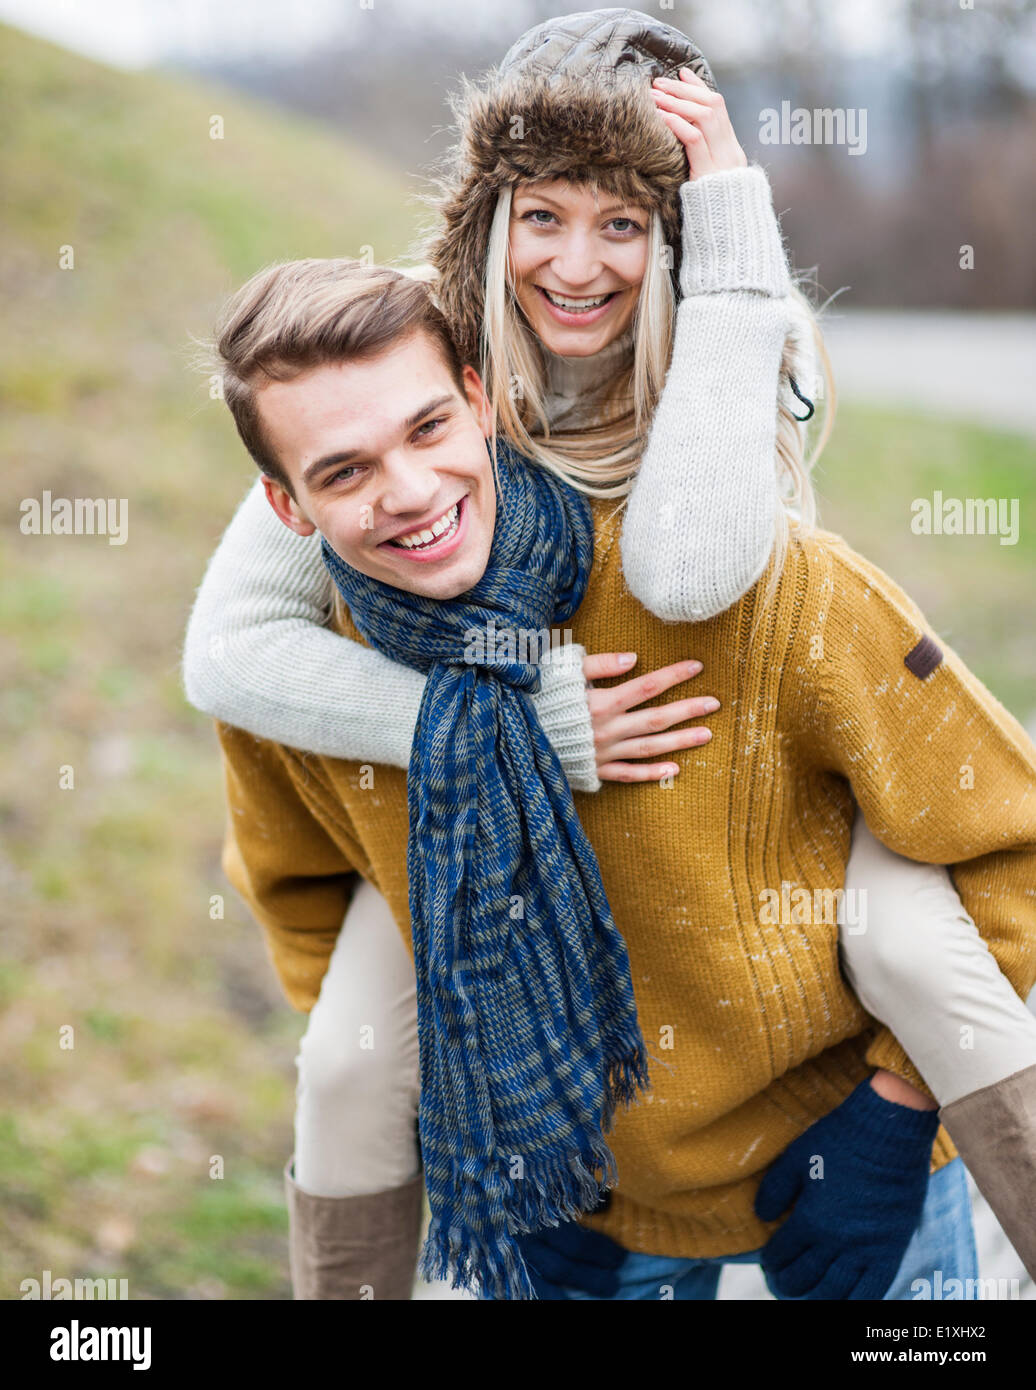 Portrait of happy man piggybacking woman in park Stock Photo